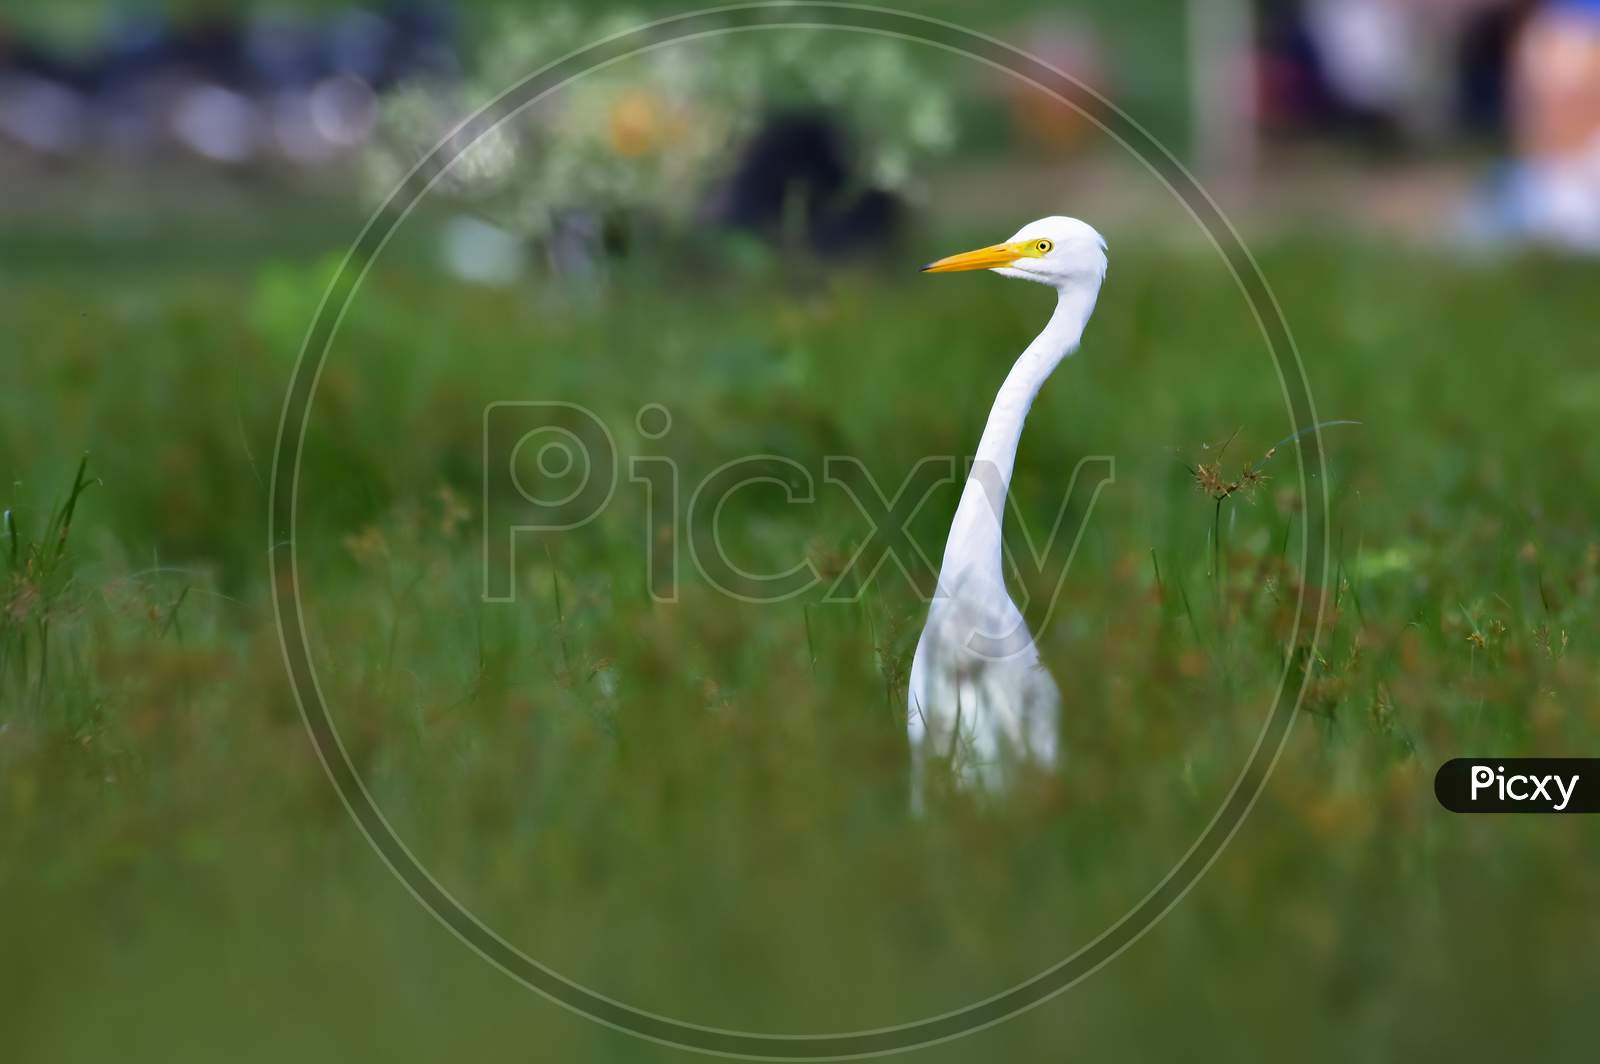 Intermediate Egret Head Pop Out Of Grass